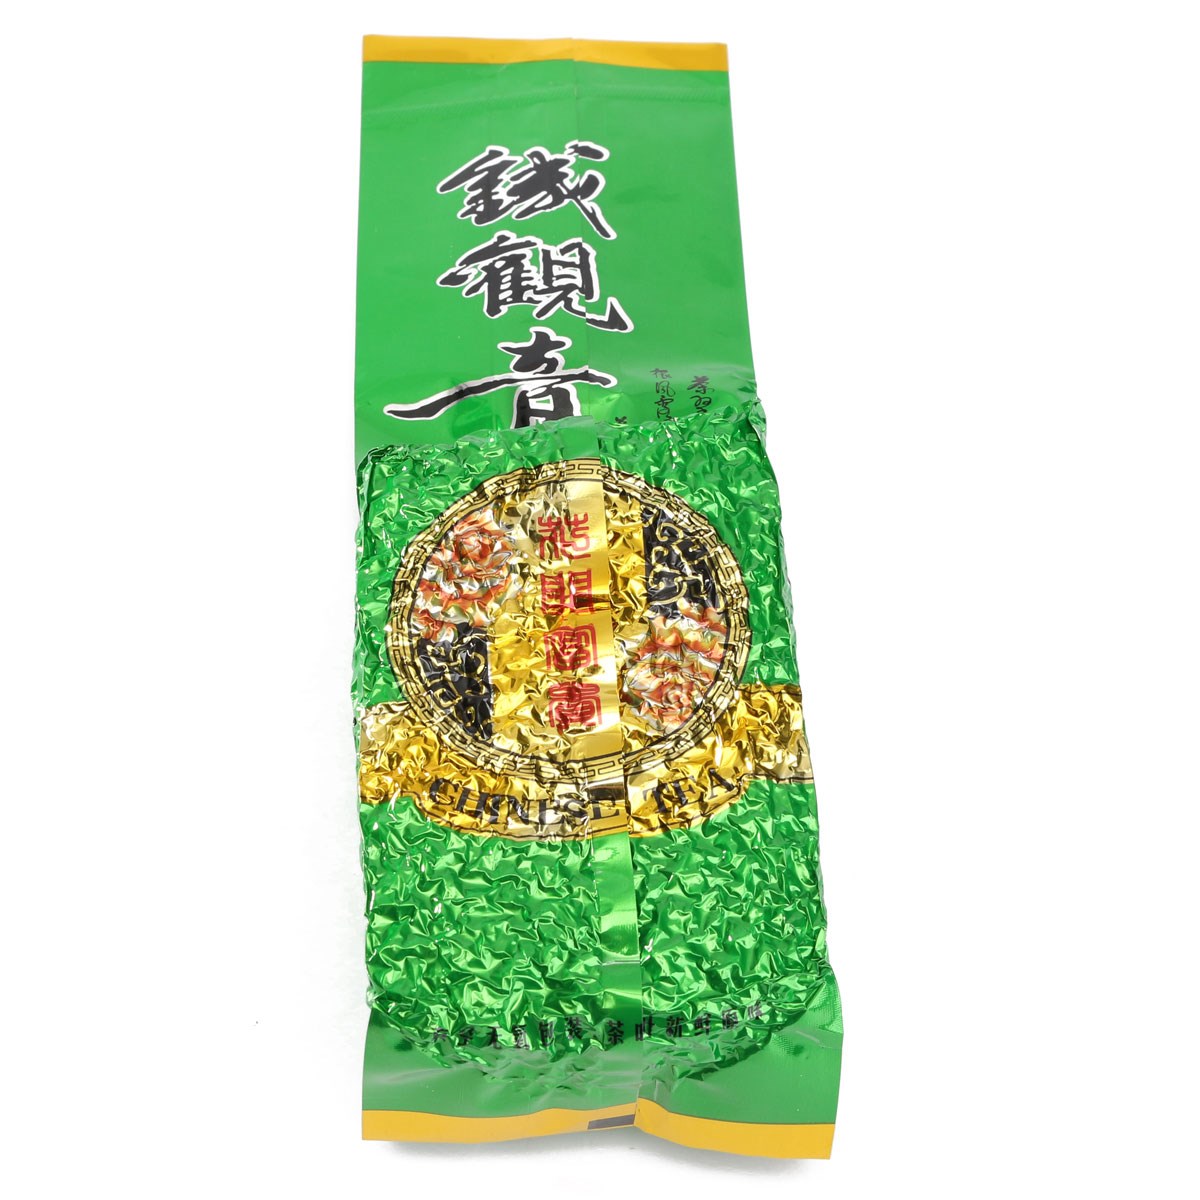 New 250g Organic Strong Fragrant AnXi Tie Guan Yin Chinese Oolong Green Tea Health tieguanyin Buy